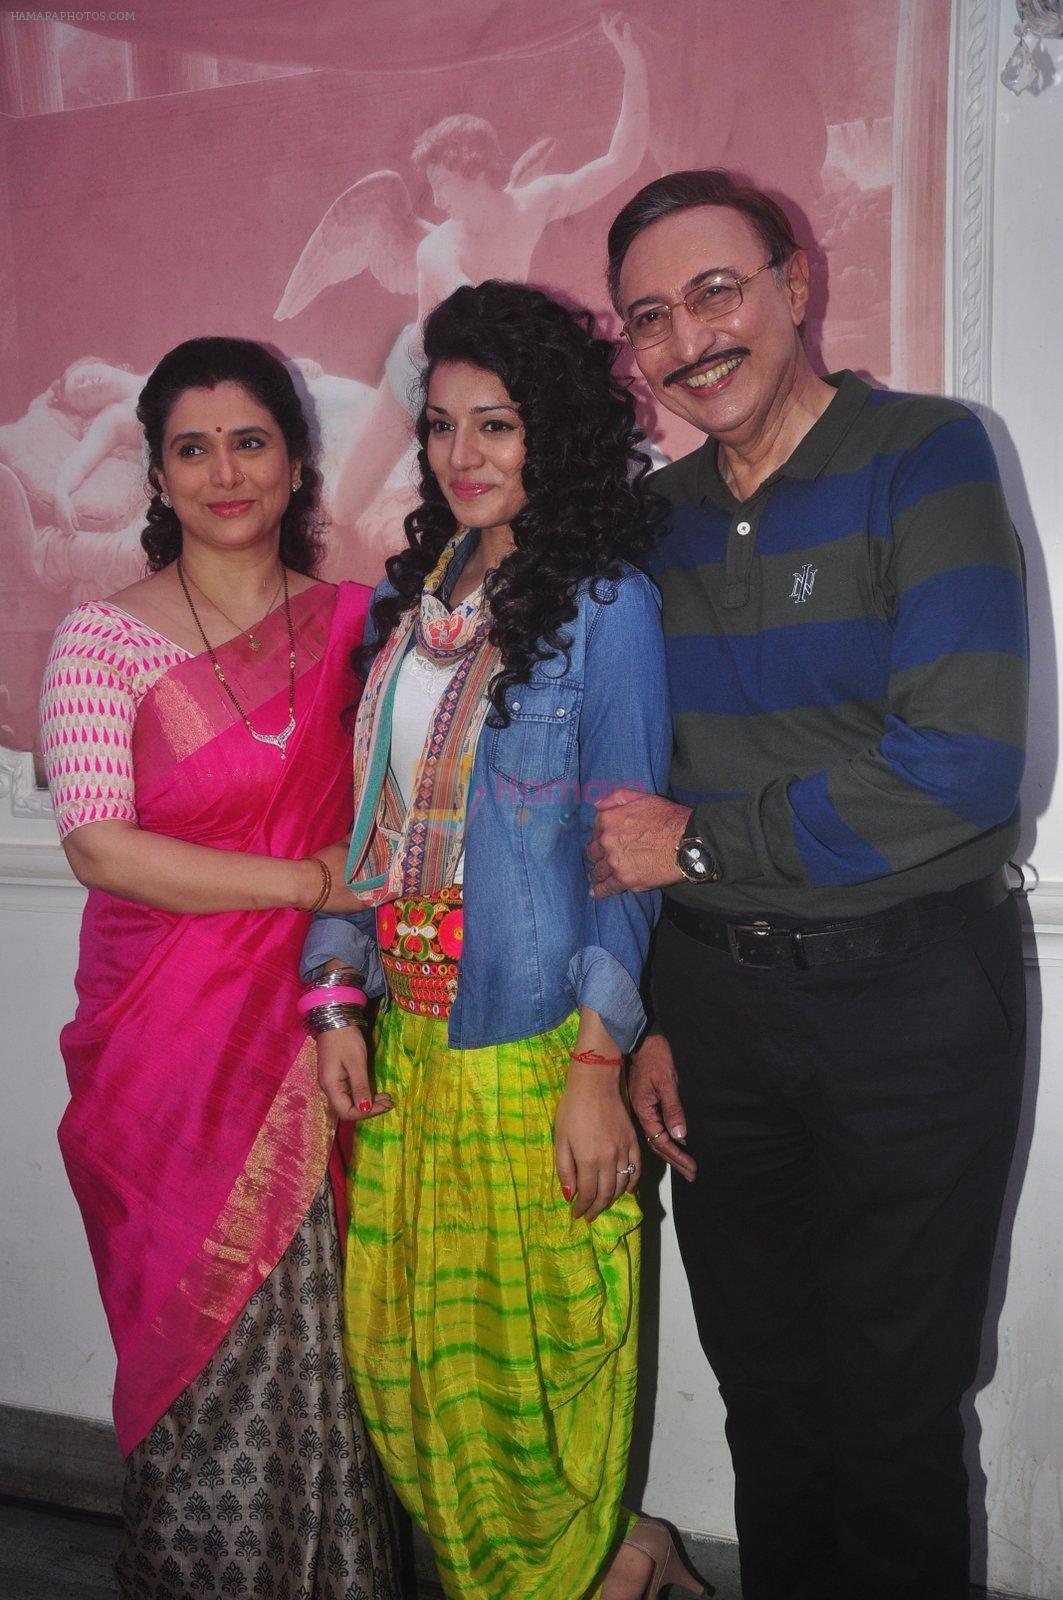 Sukirti Kandpal, Supriya Pilgaonkar, Anang Desai at & TV Dilli Wali Thakur Gurls launch in Mumbai on 25th March 2015